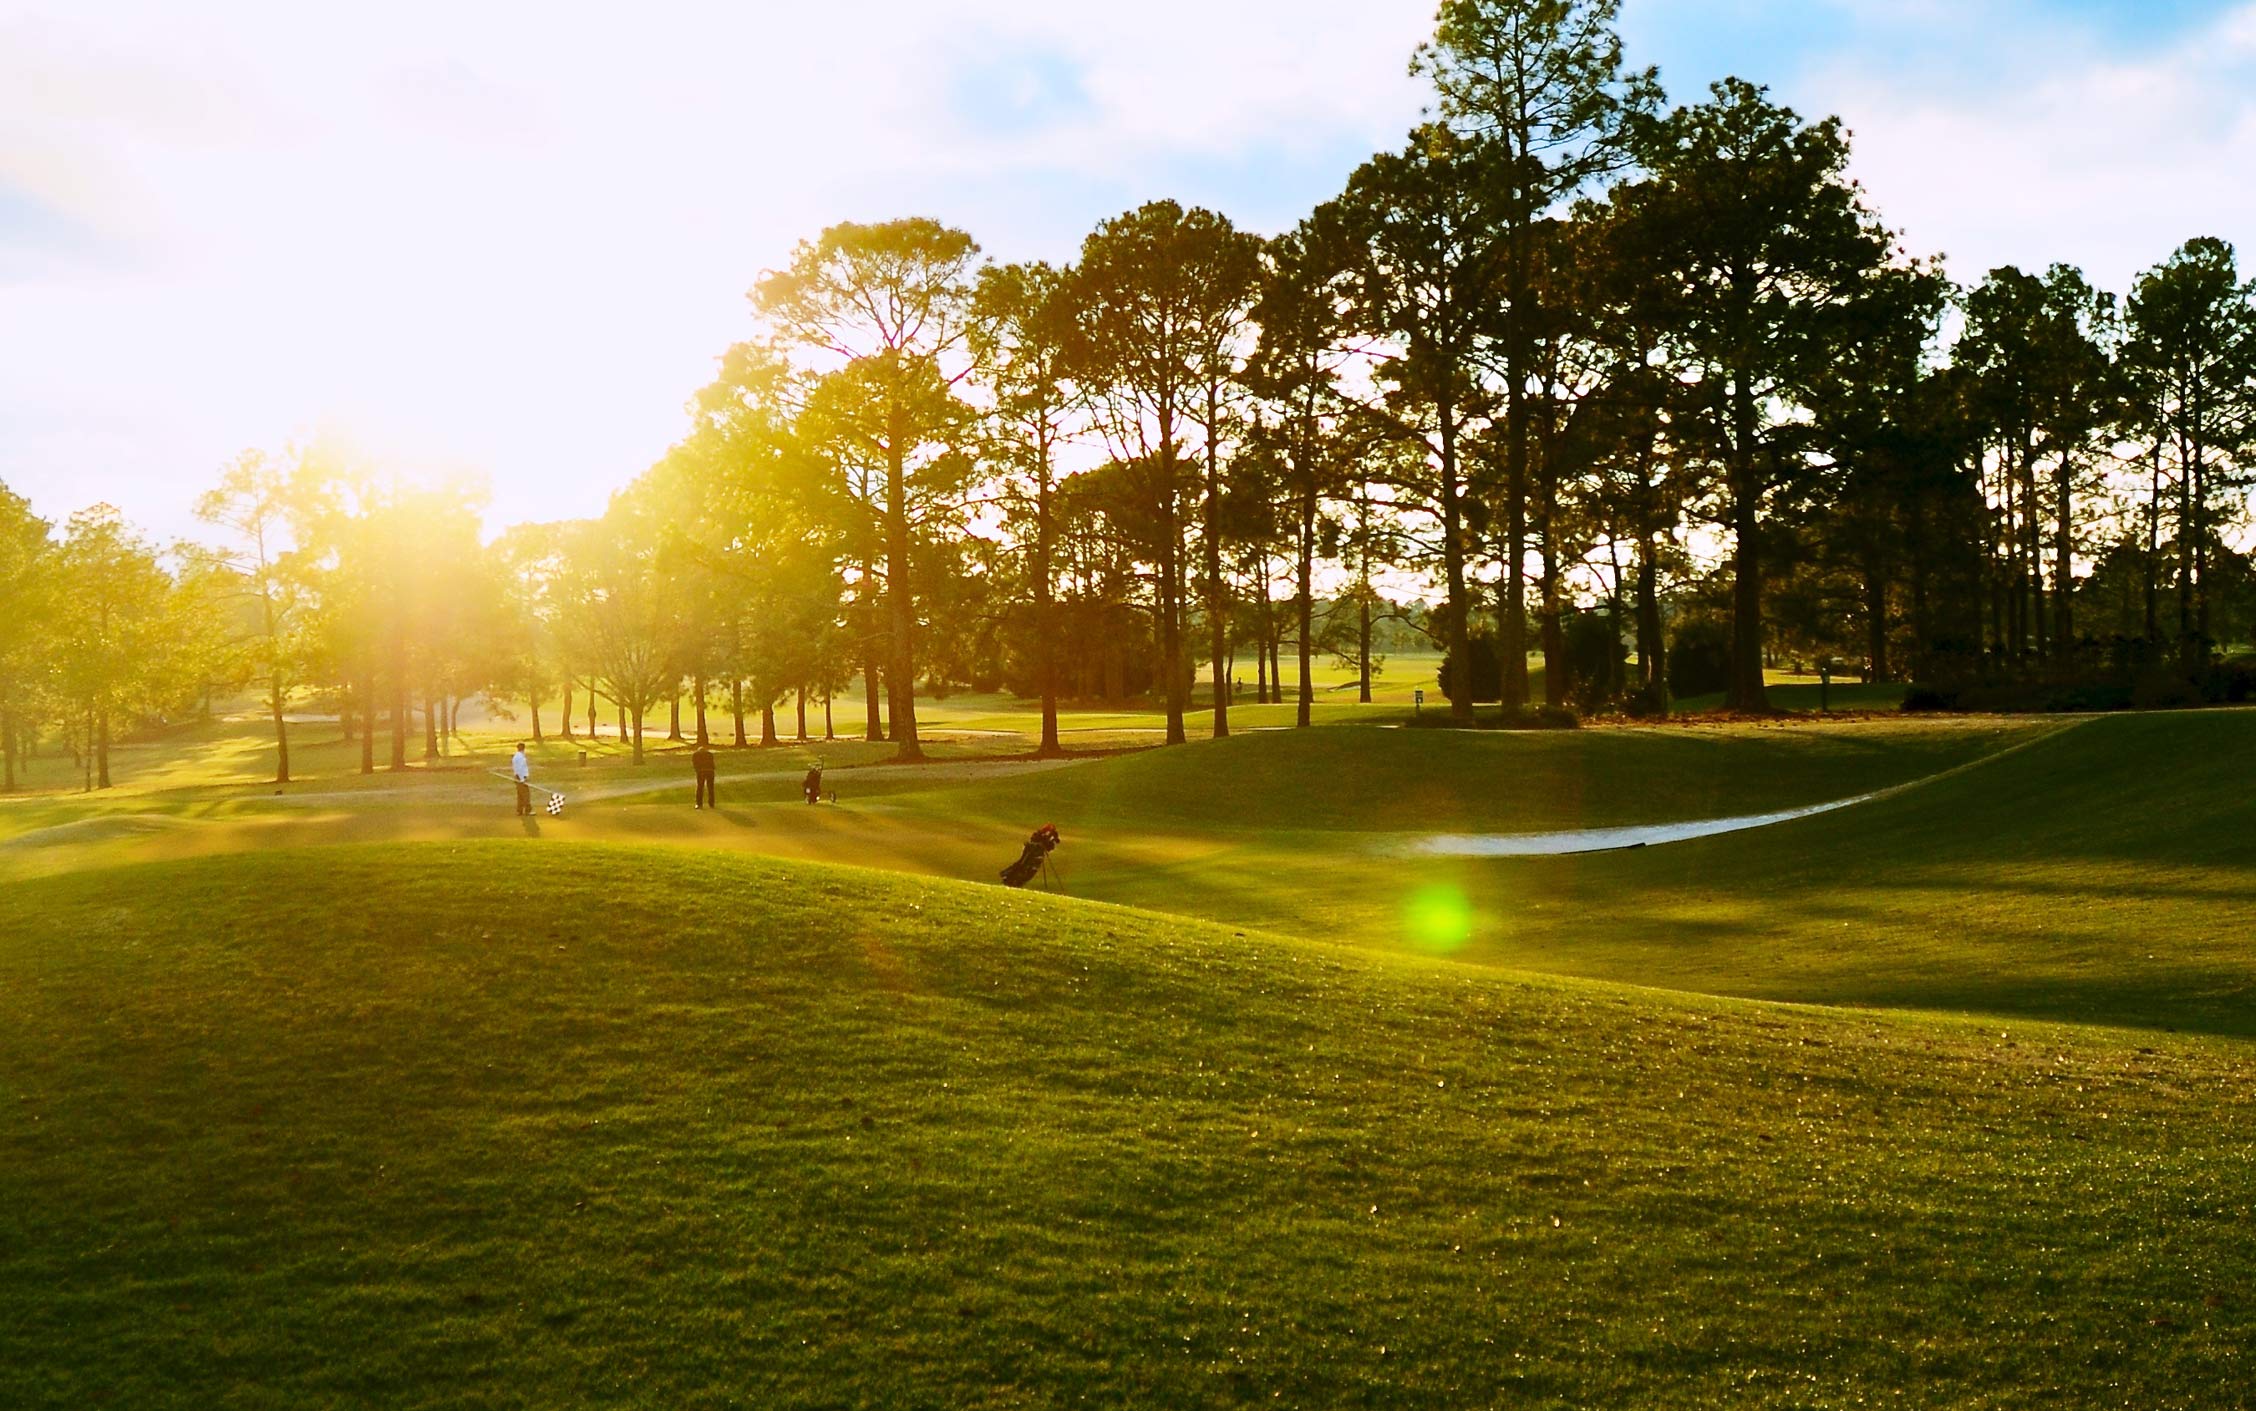 A beautiful golf course at sunrise